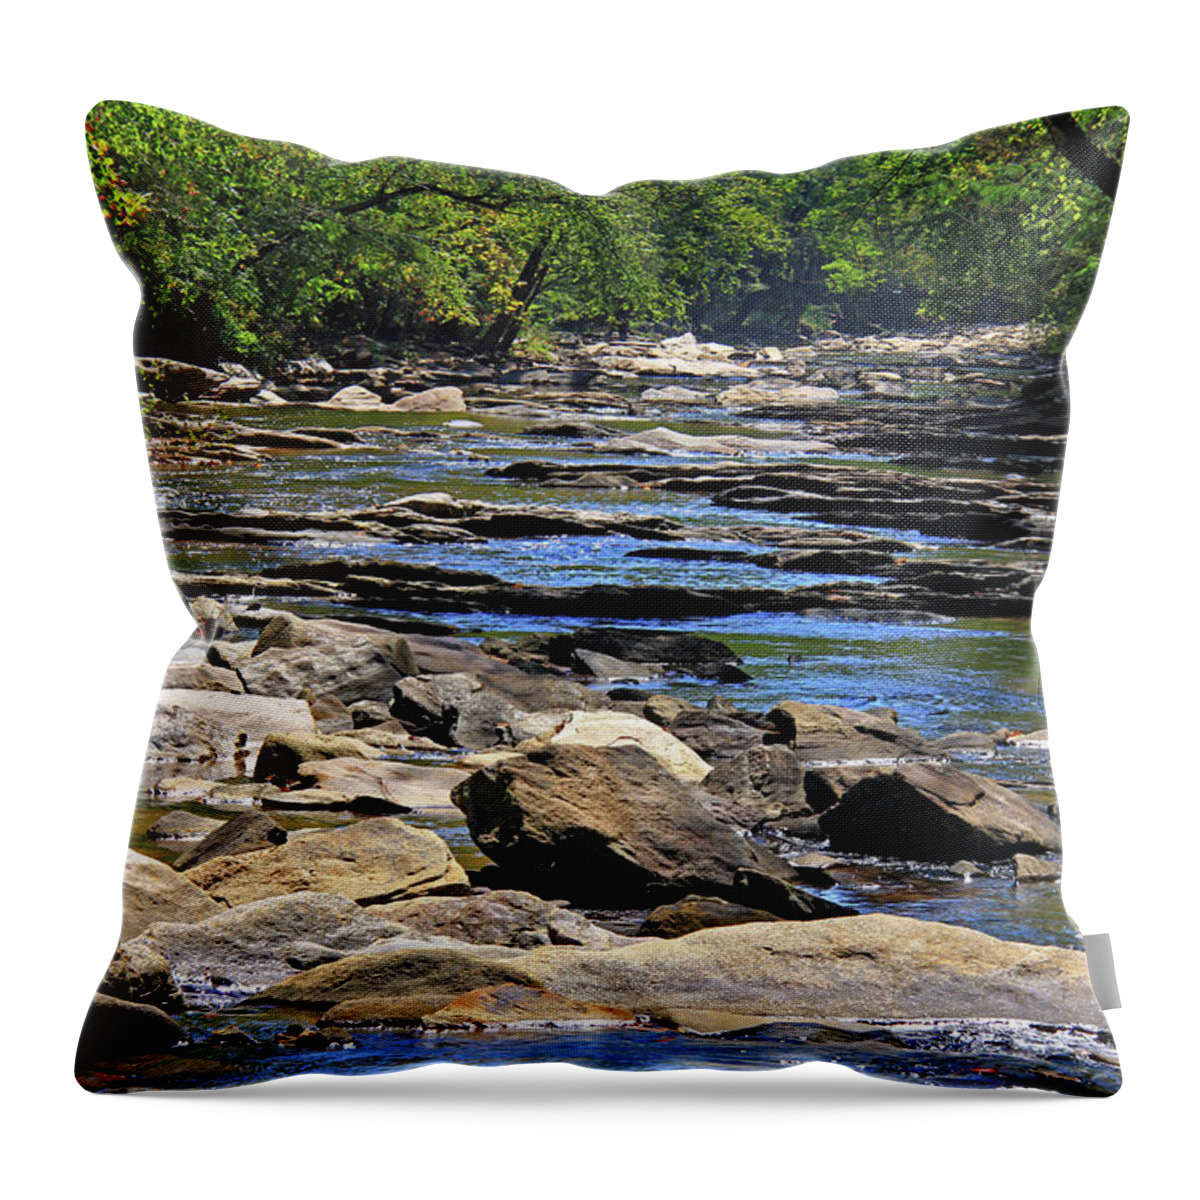 Sope Creek Throw Pillow featuring the photograph Sope Creek 2 - Atlanta, Georgia by Richard Krebs